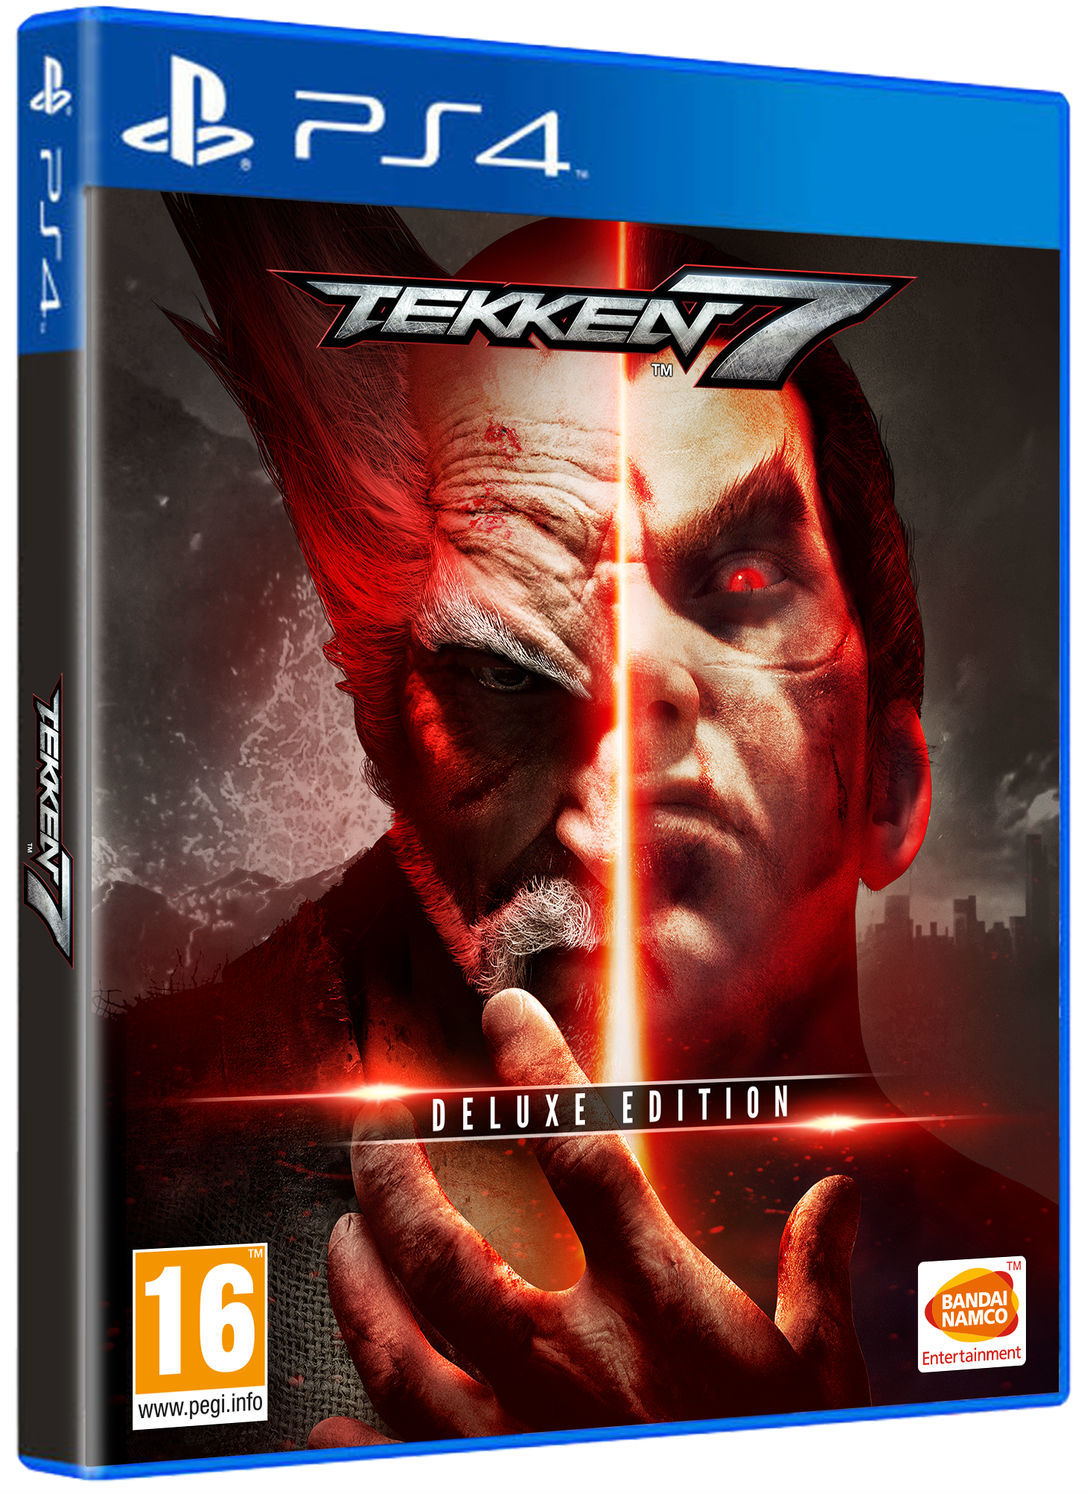 PS4: Tekken 7 Deluxe Edition [R3/ENG] – Game Wiz Enterprise